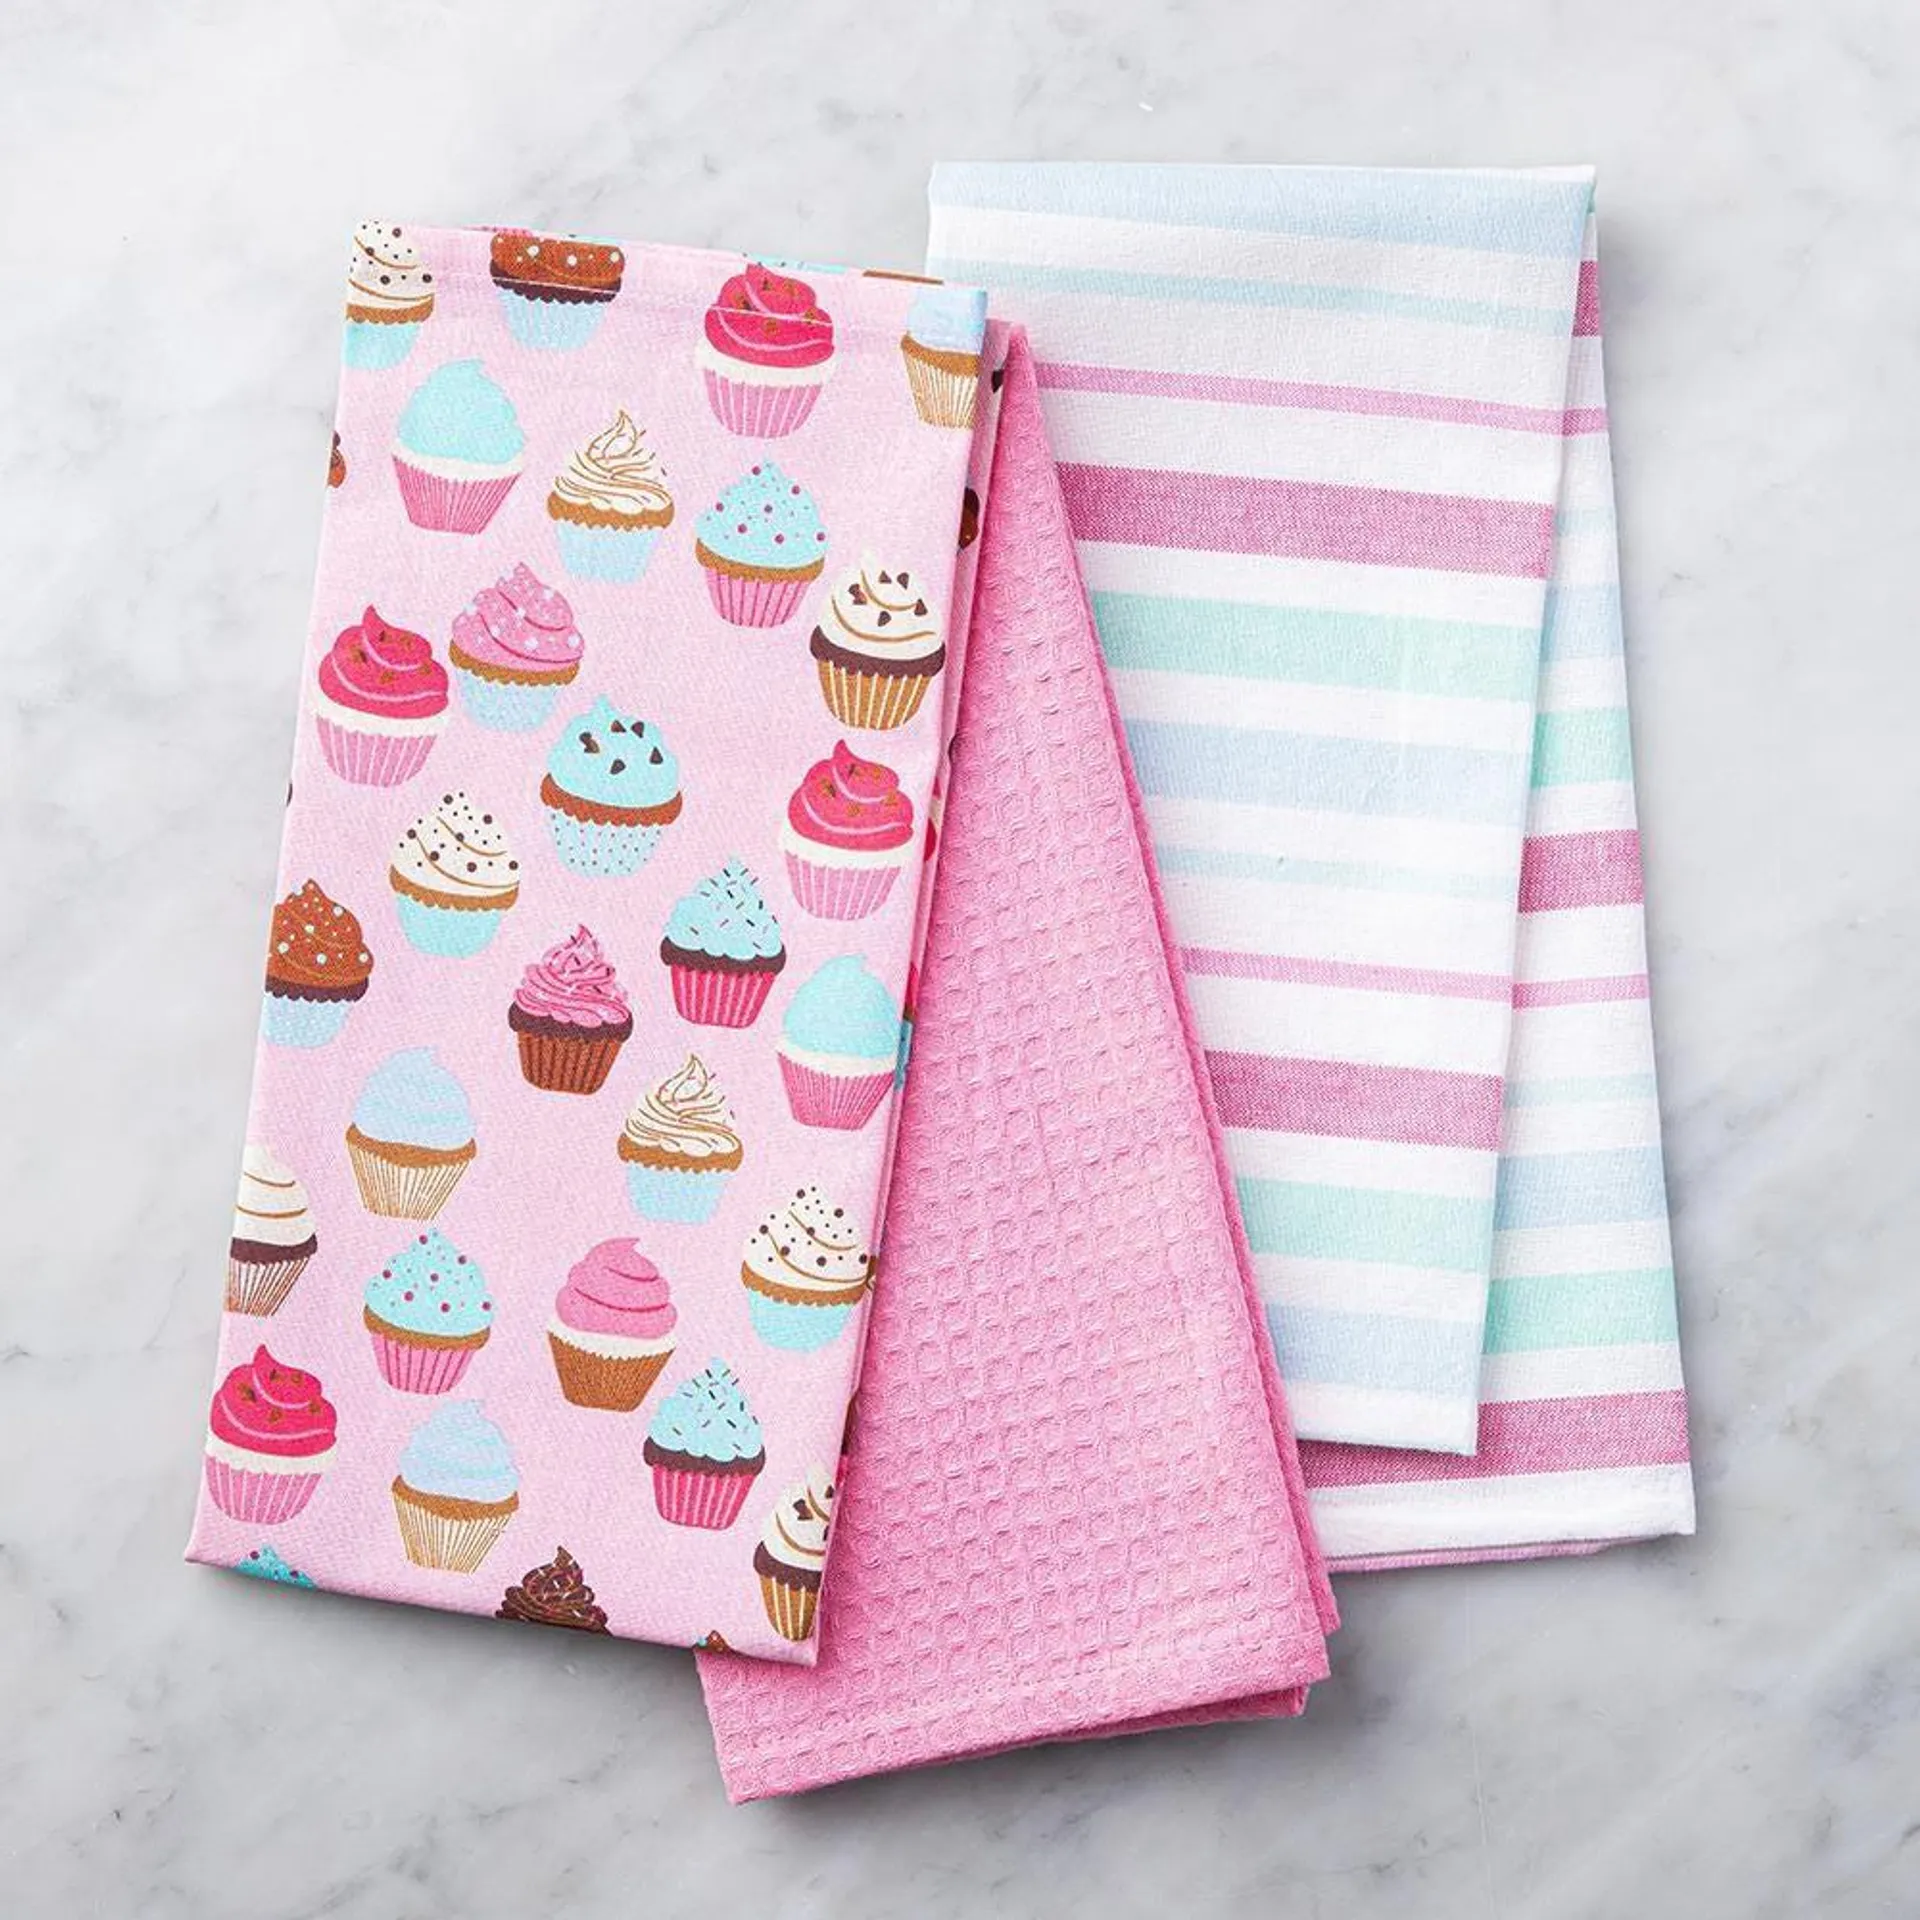 Harman Combo 'Cupcake' Cotton Kitchen Towel - Set of 3 (Pink)